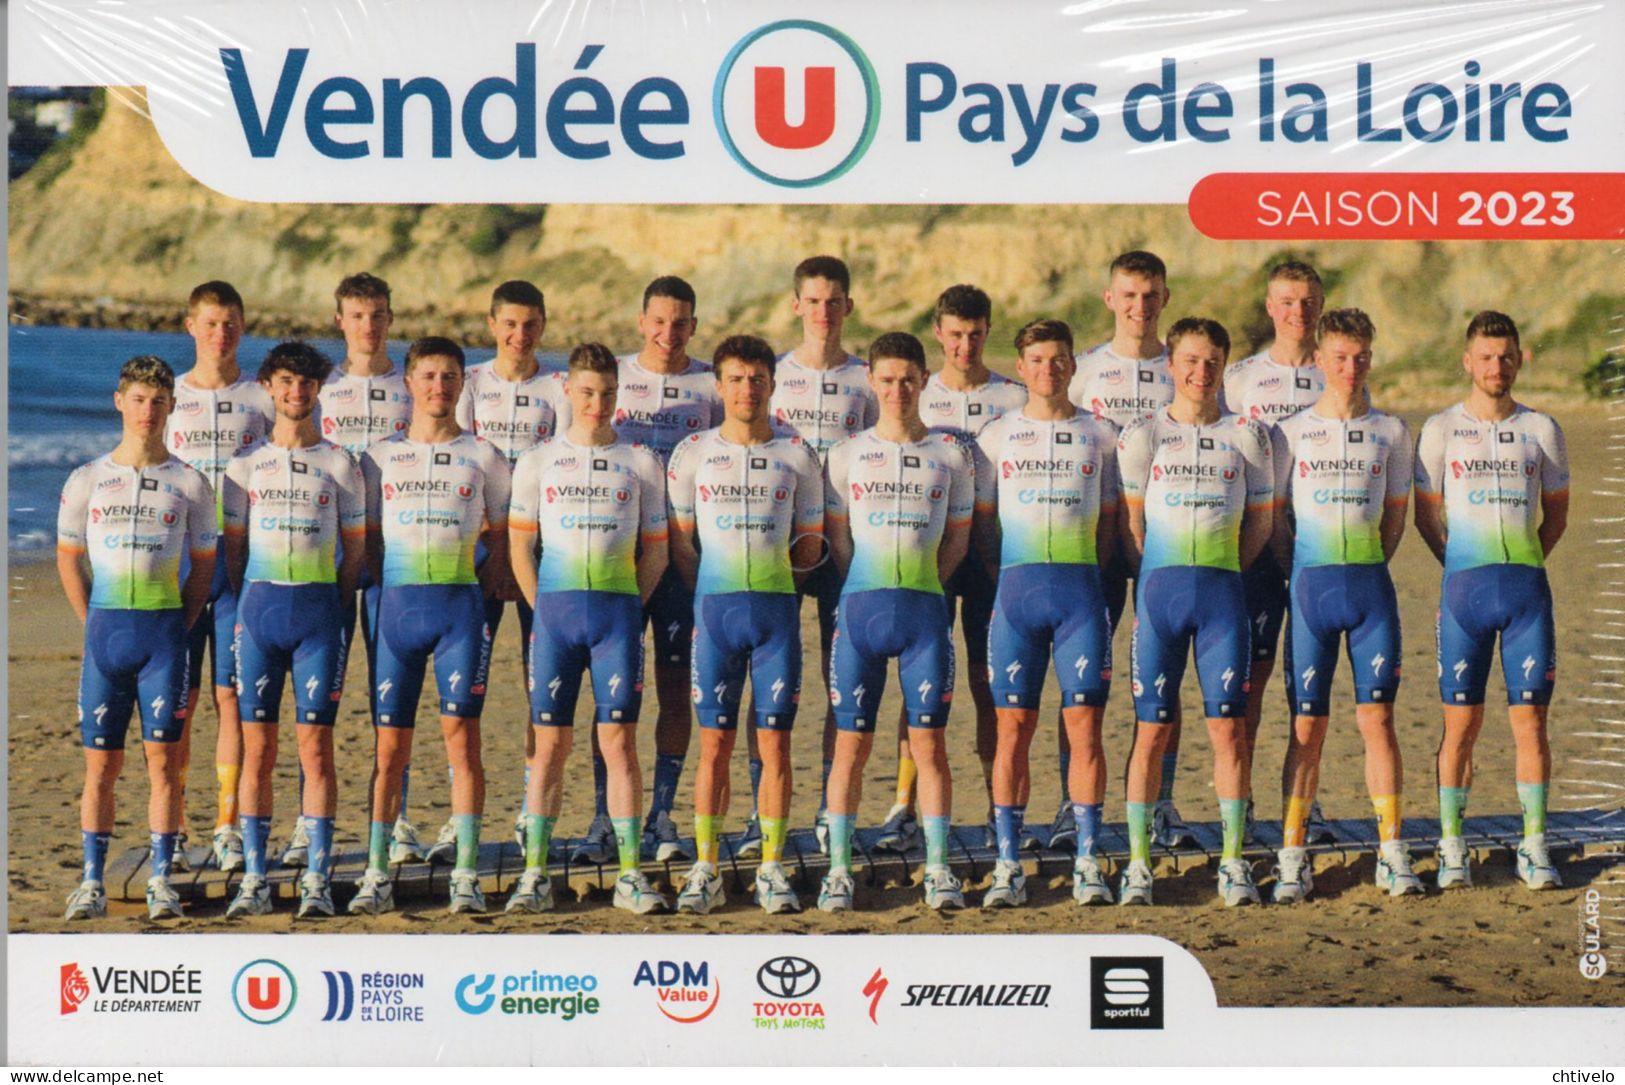 Cyclisme, Serie Vendée U 2023, Sous Blister - Cycling